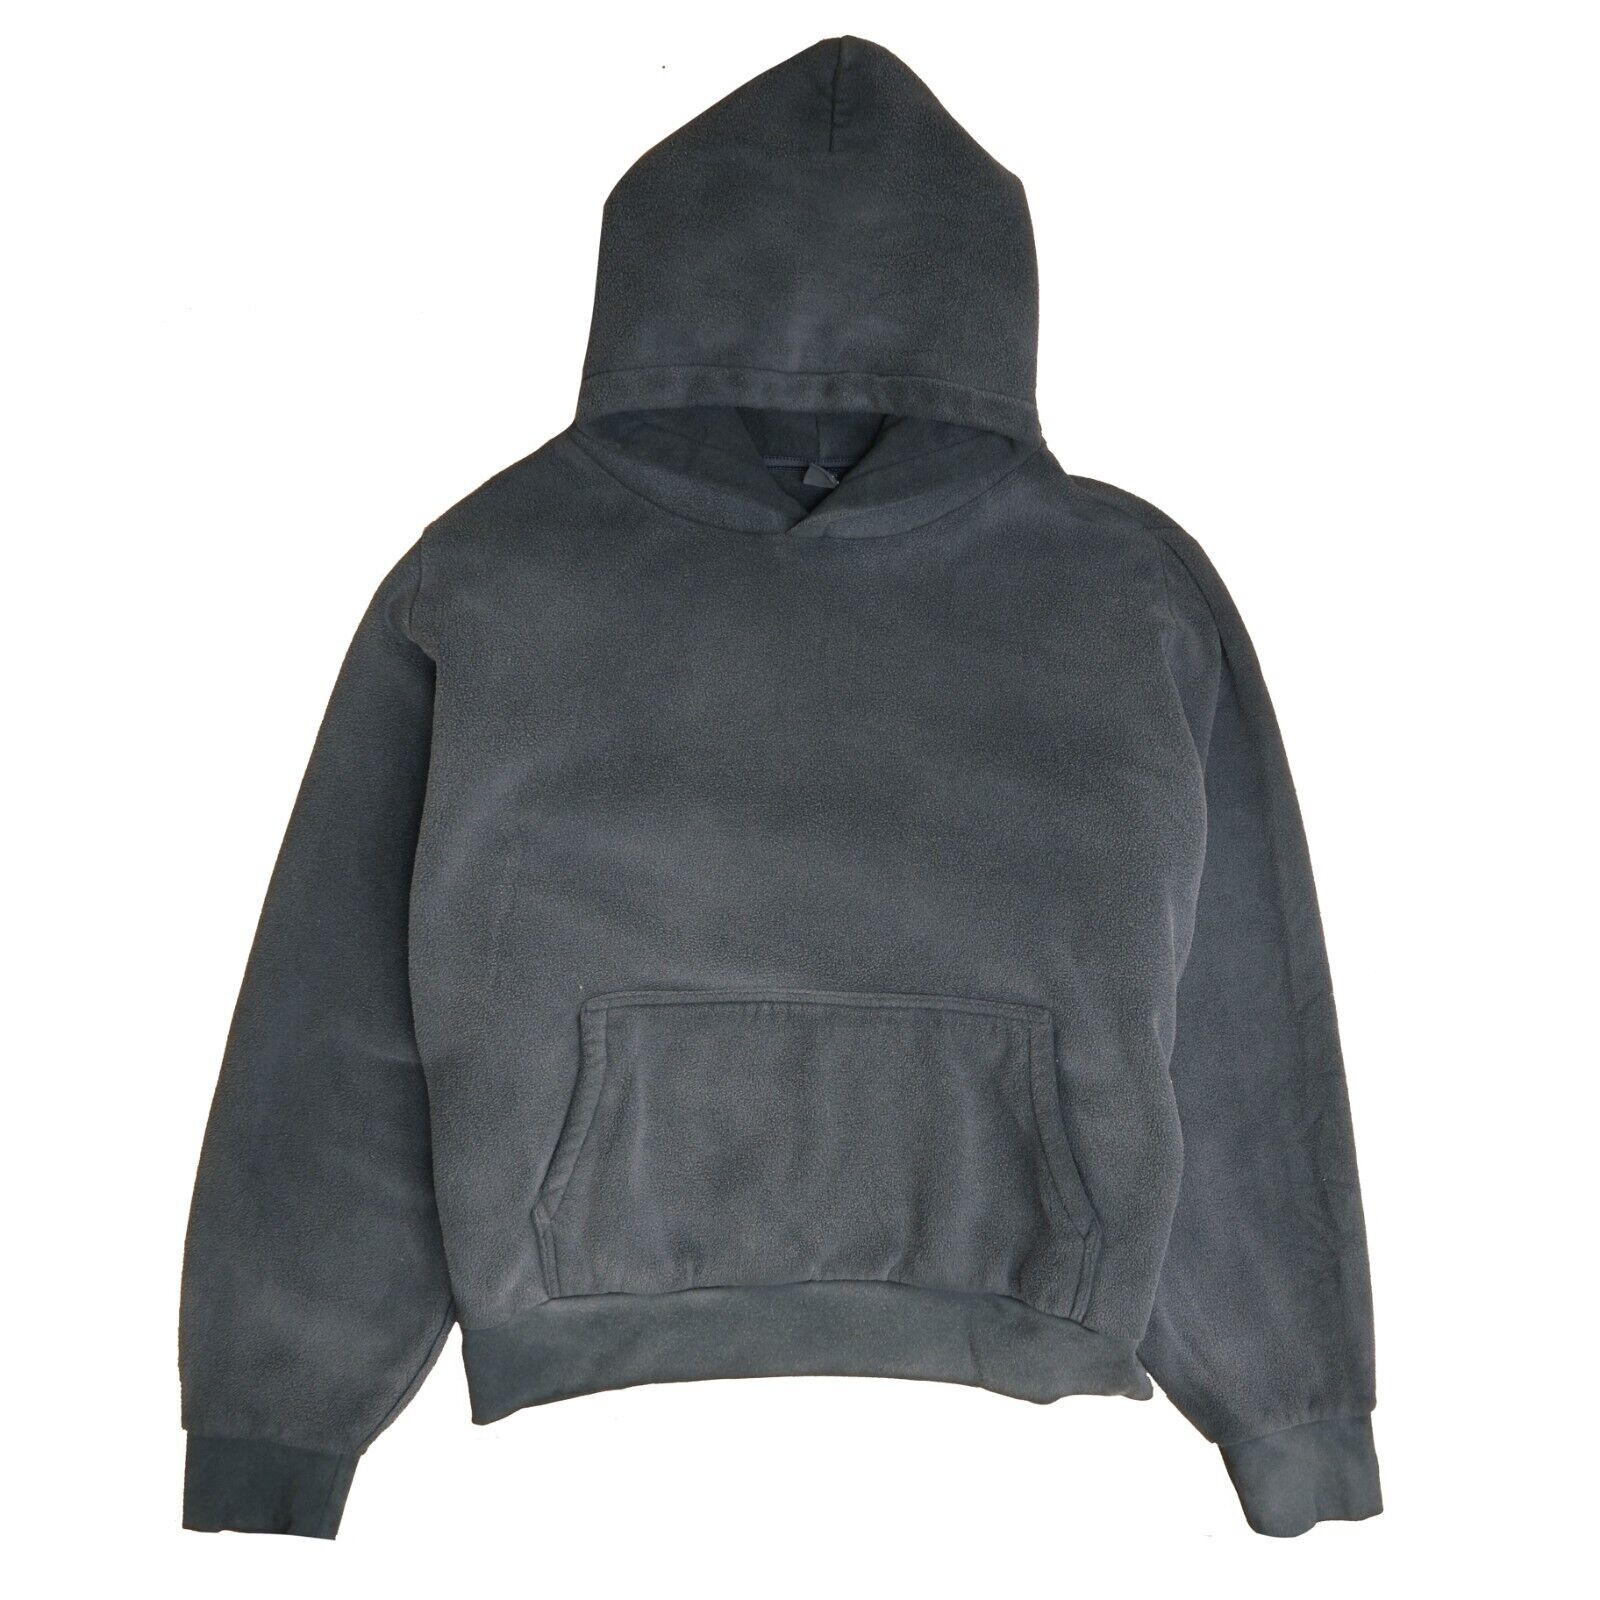 Yeezy Gap Unreleased Pullover Sweatshirt Hoodie Size XL Dark Gray 